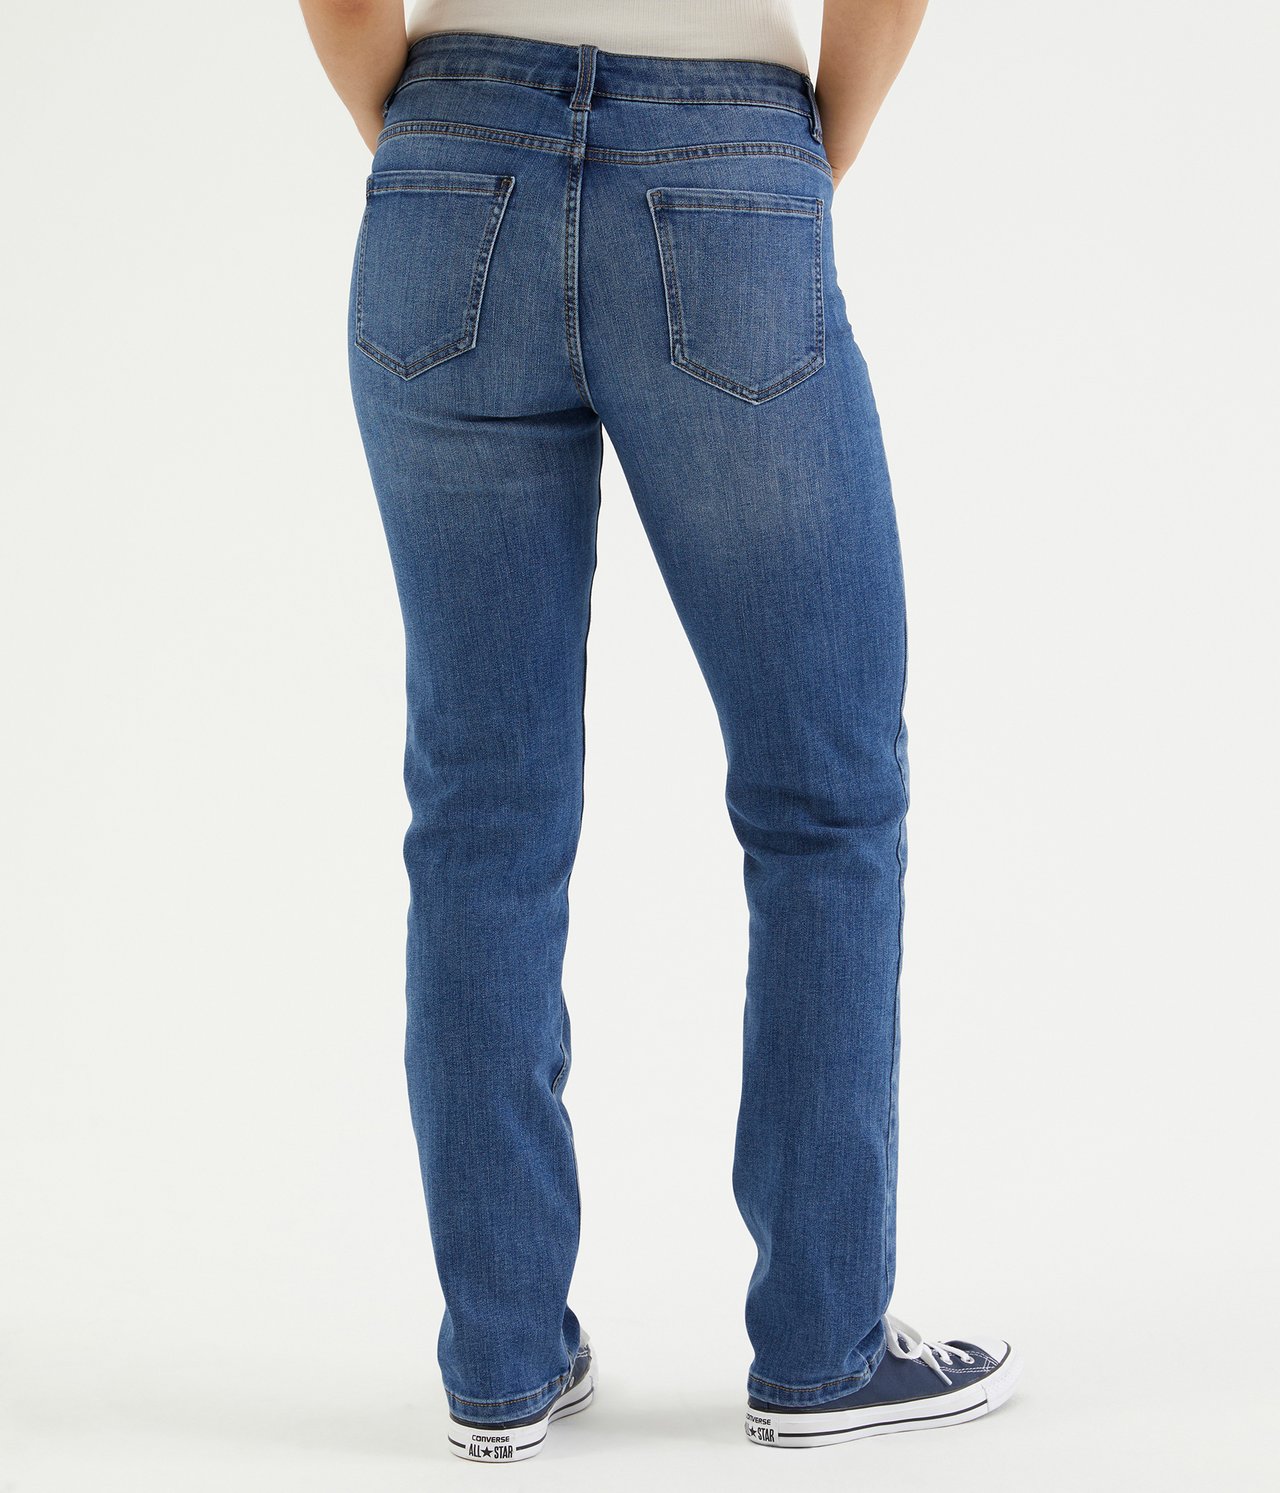 Alice straight jeans extra long leg - Denimi - 6